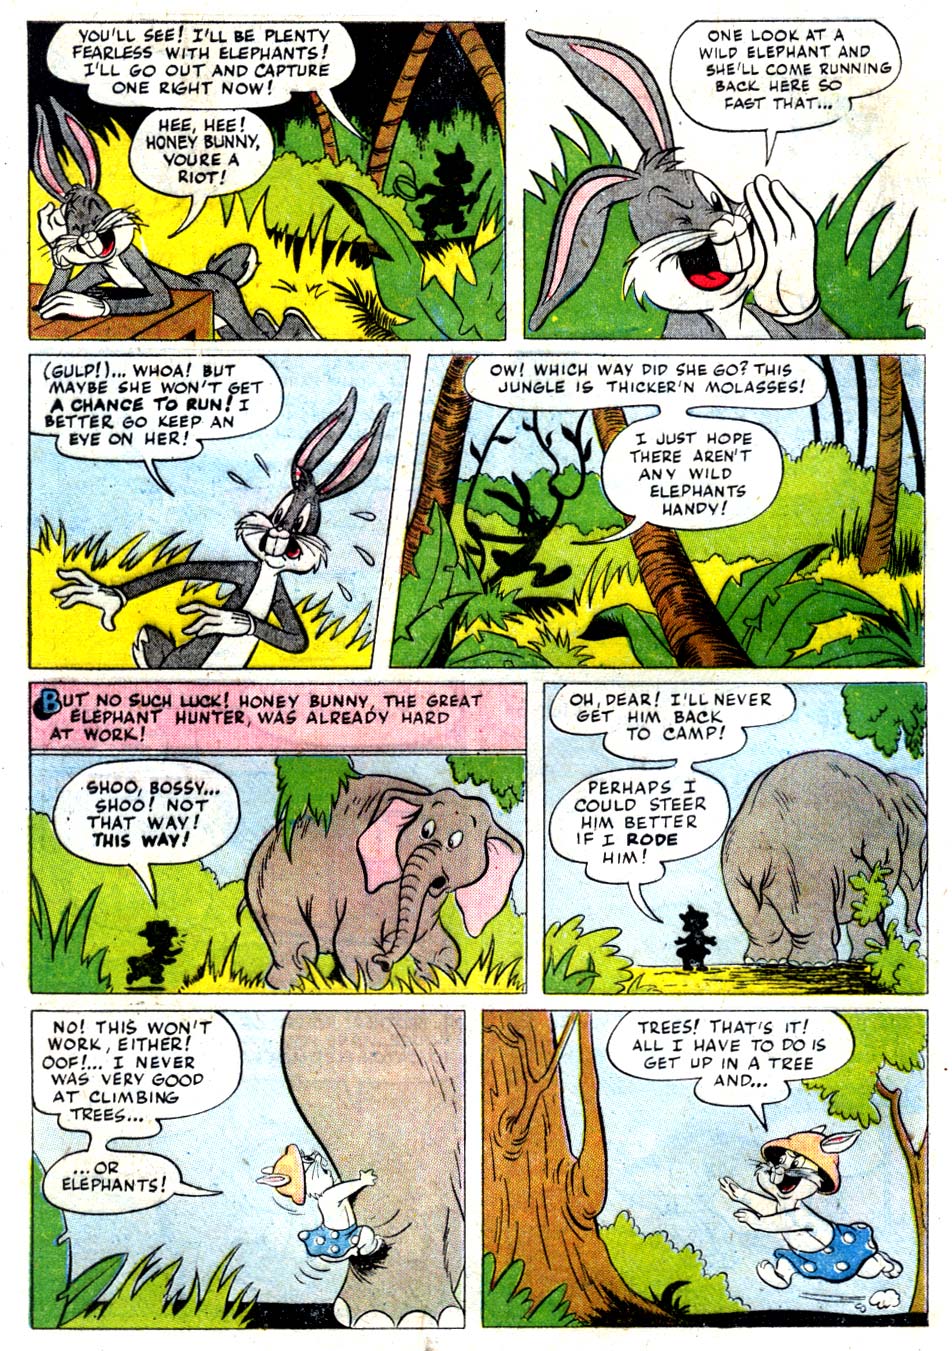 Honey Bunny (Bugs Bunny's Album 1953)